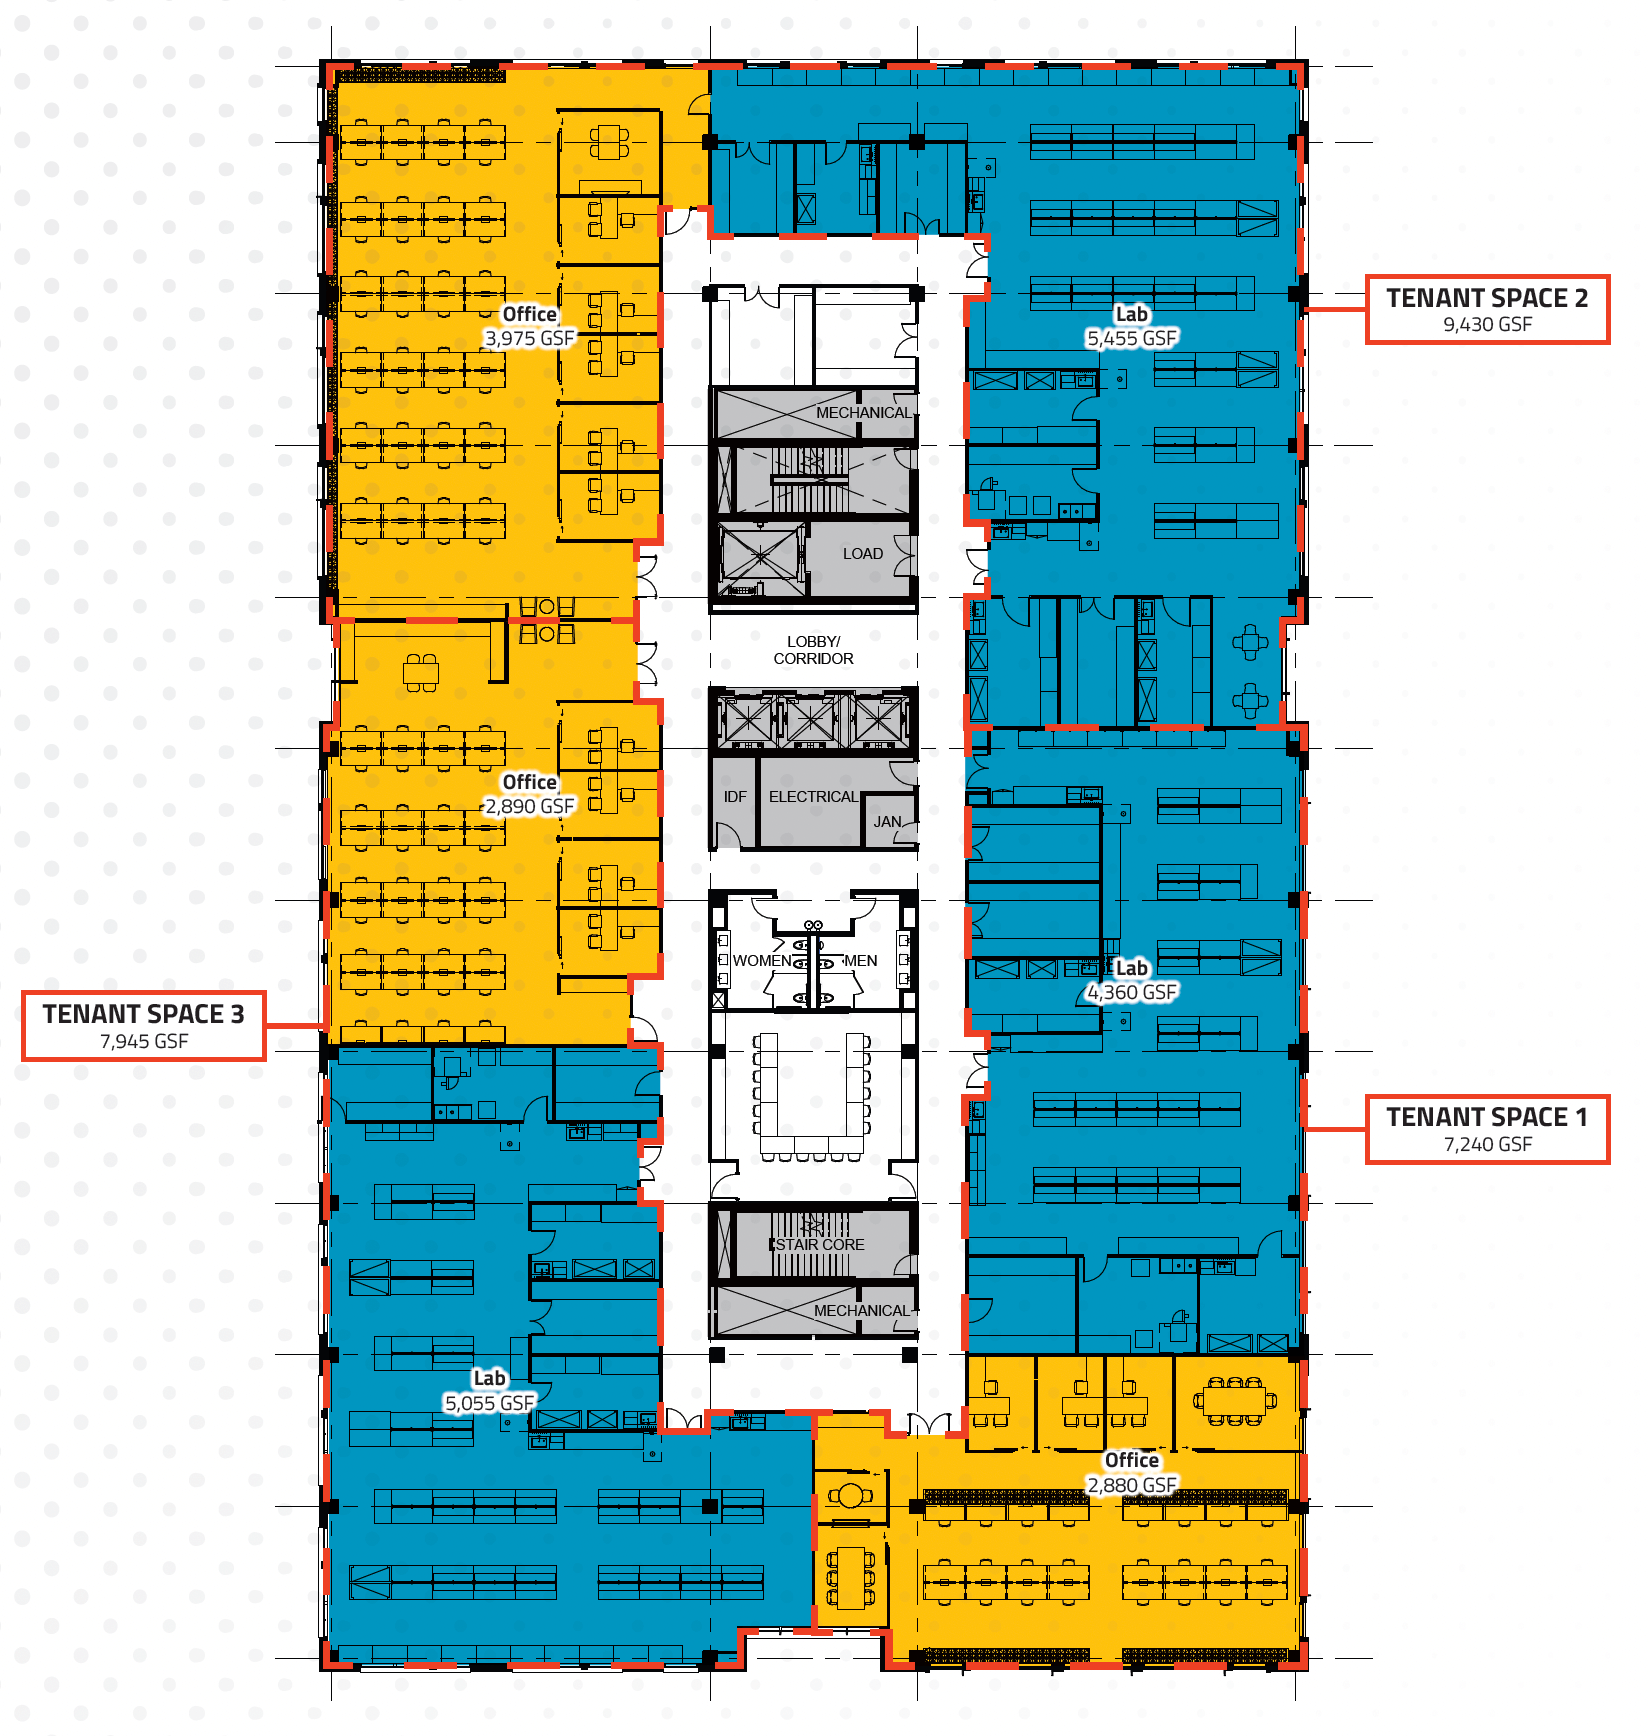 Floors 3-6